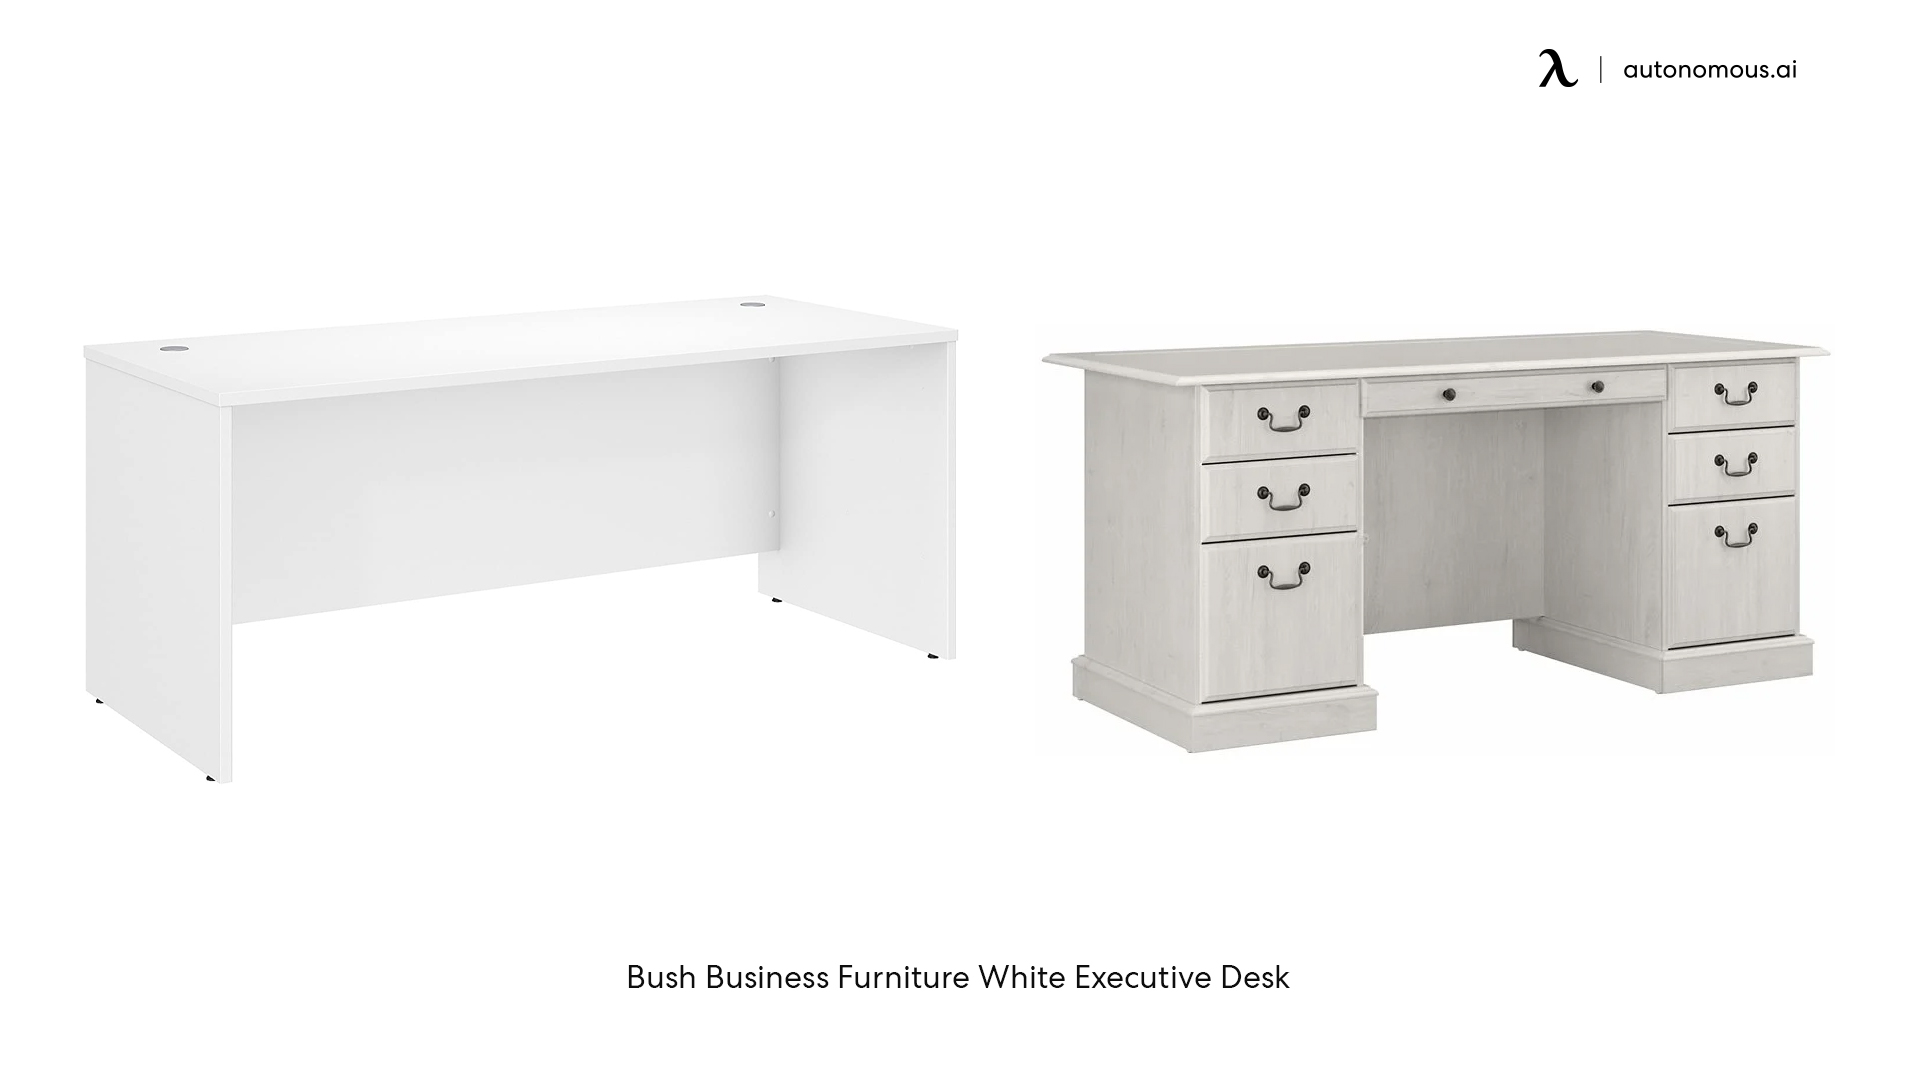 Bush Business Furniture long white desk